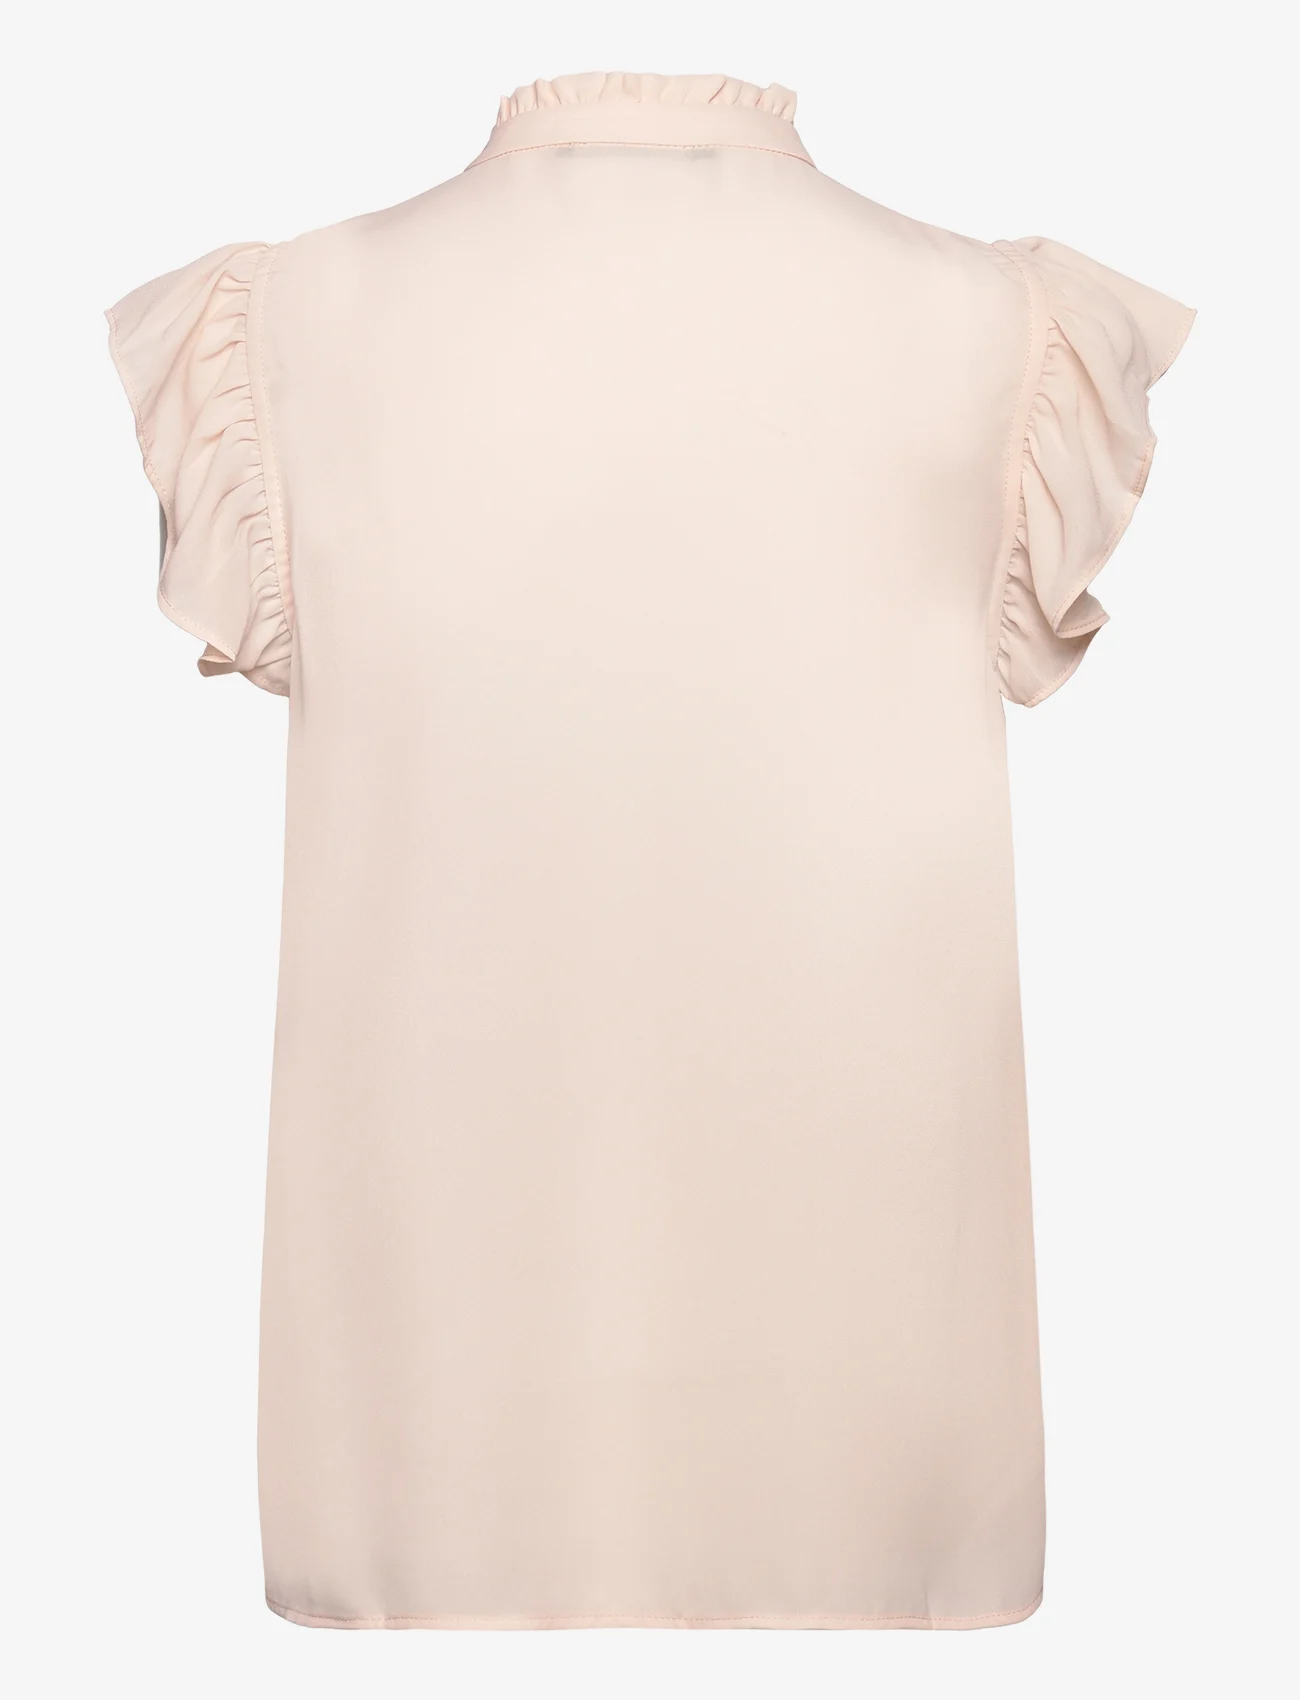 Bruuns Bazaar - CamillaBBNicole shirt - kortærmede bluser - light peach - 1